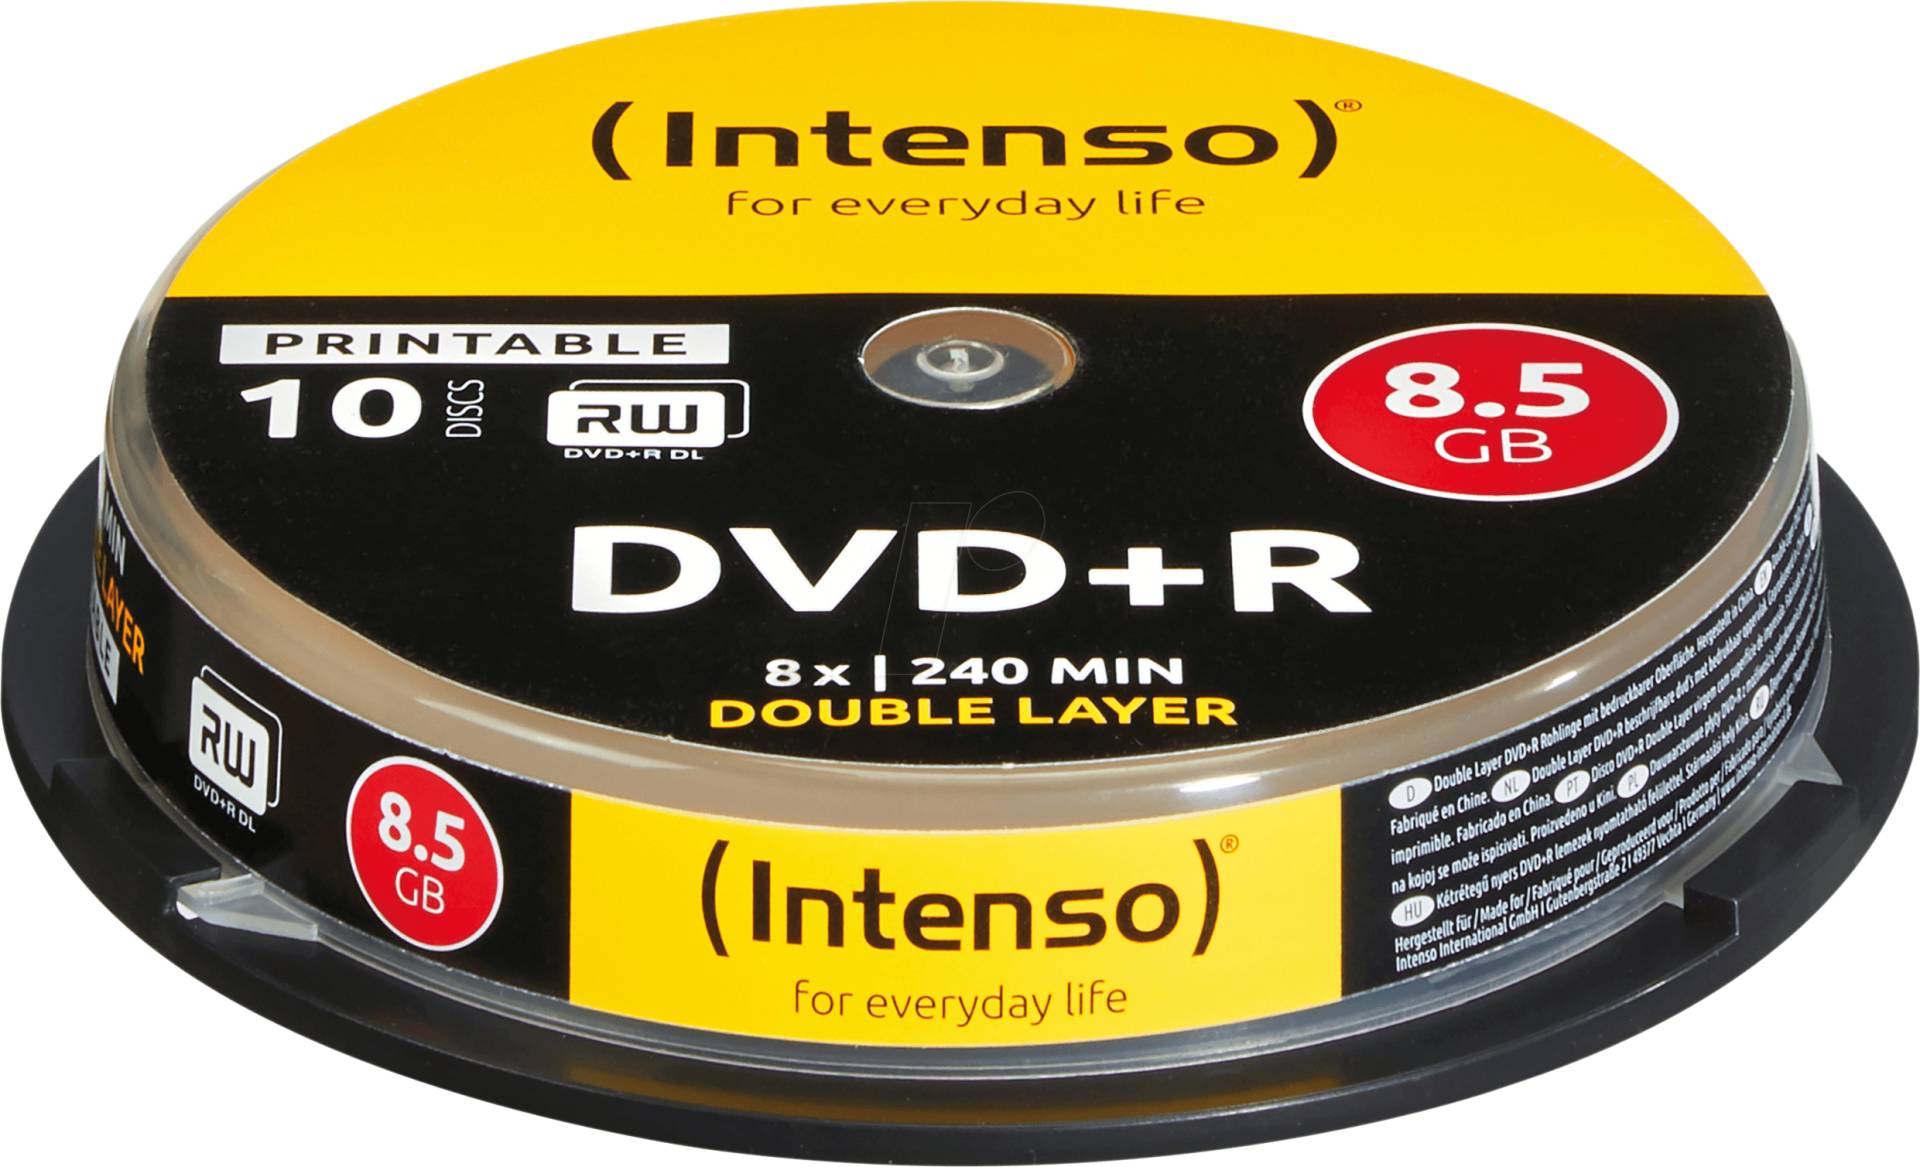 DVD+R8,5 INT10P - Intenso DVD+R 8,5GB, 10-er, DoubleLayer, Print von Intenso